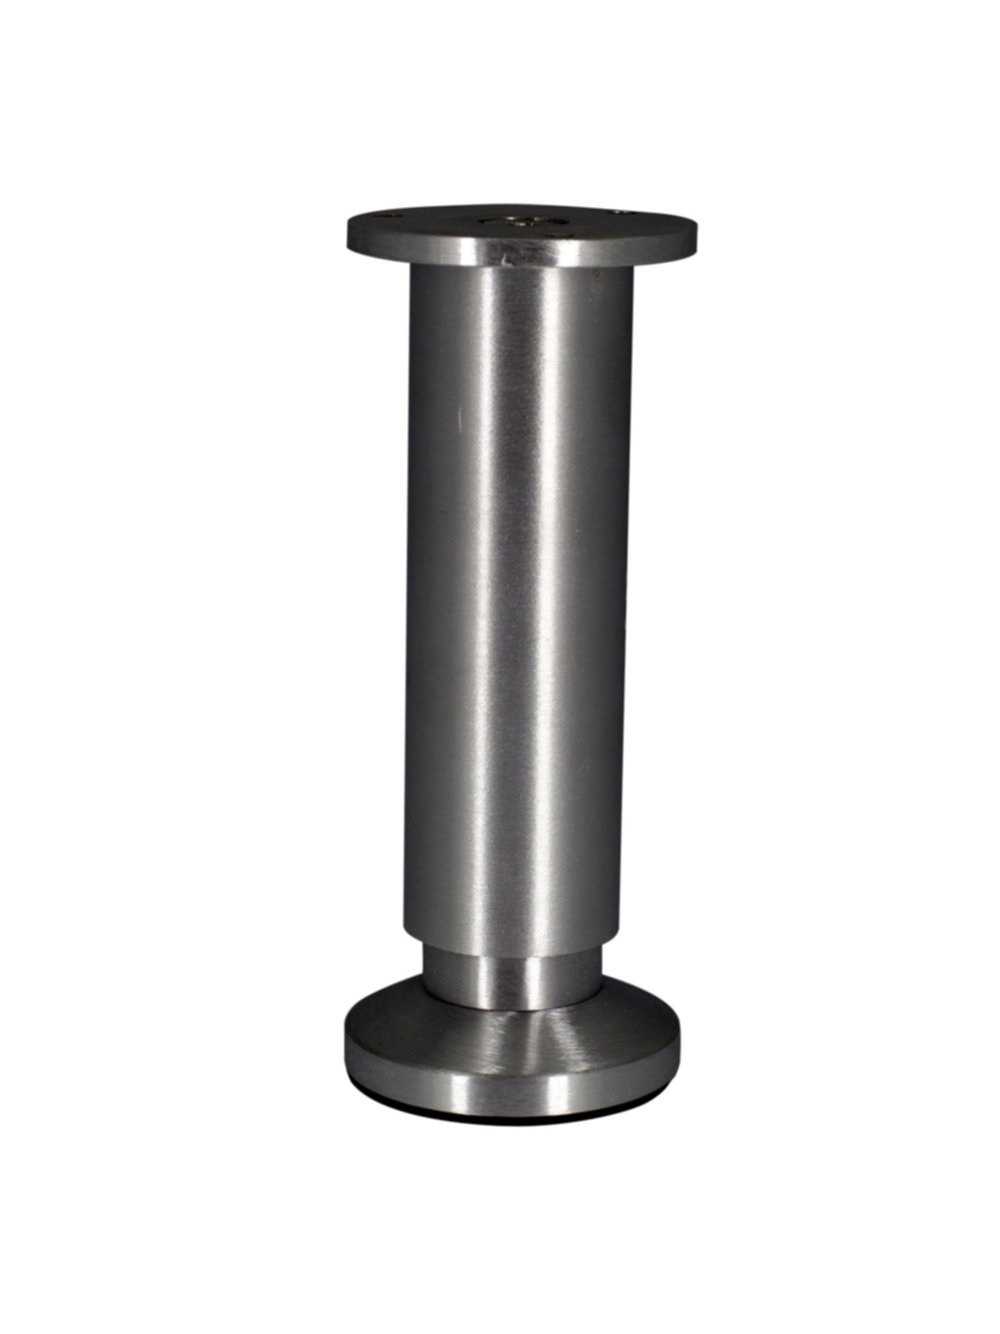 Pied aluminium pour meuble ou caisson. Ø38mm H150 mm Aluminium brossé finition inox - CIME